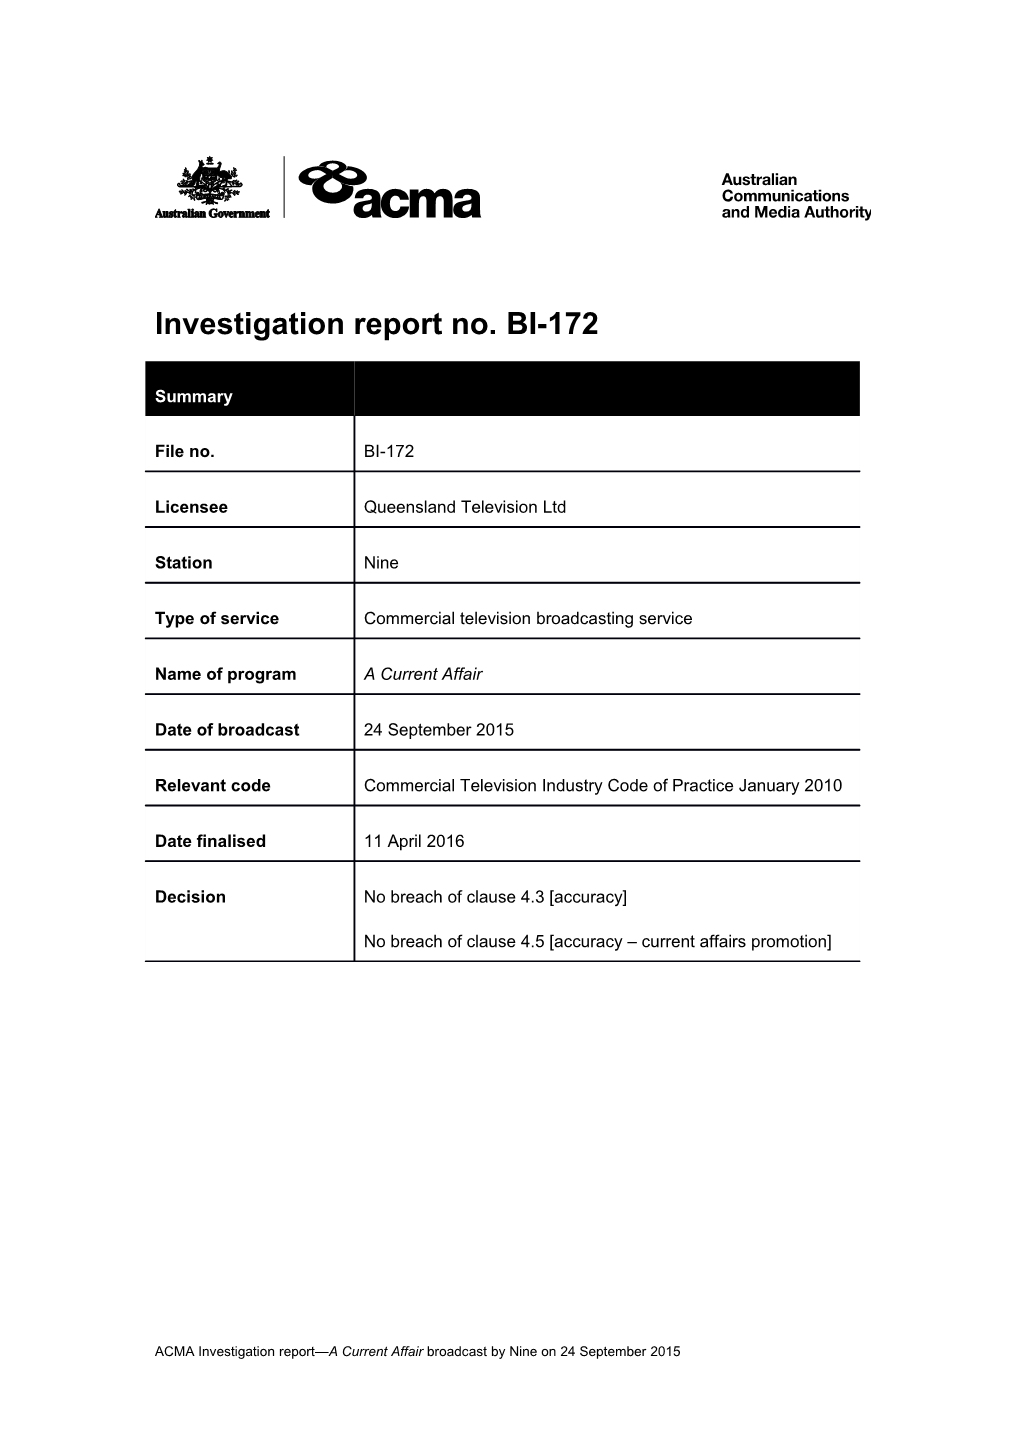 Investigation Report No. BI-172